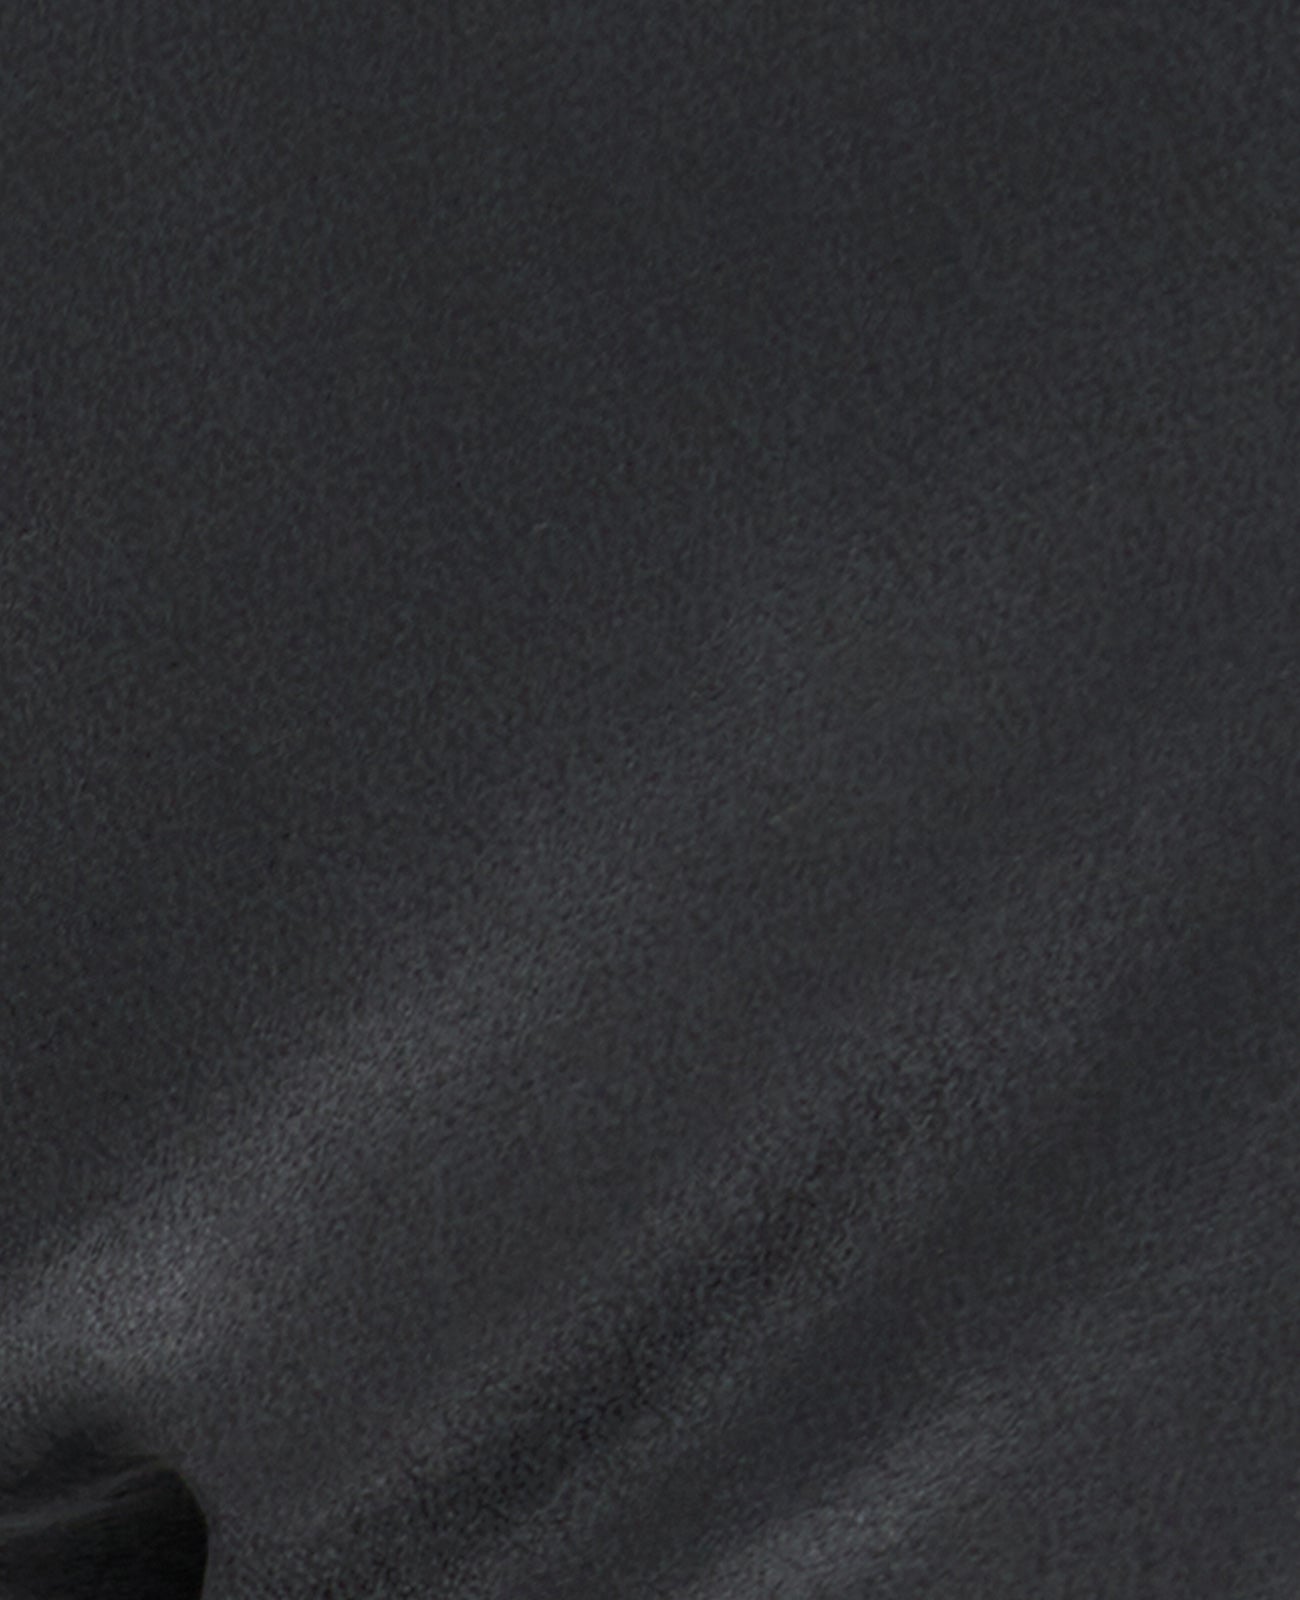 Silk Halter Camisole in BLACK | GRANA #color_black